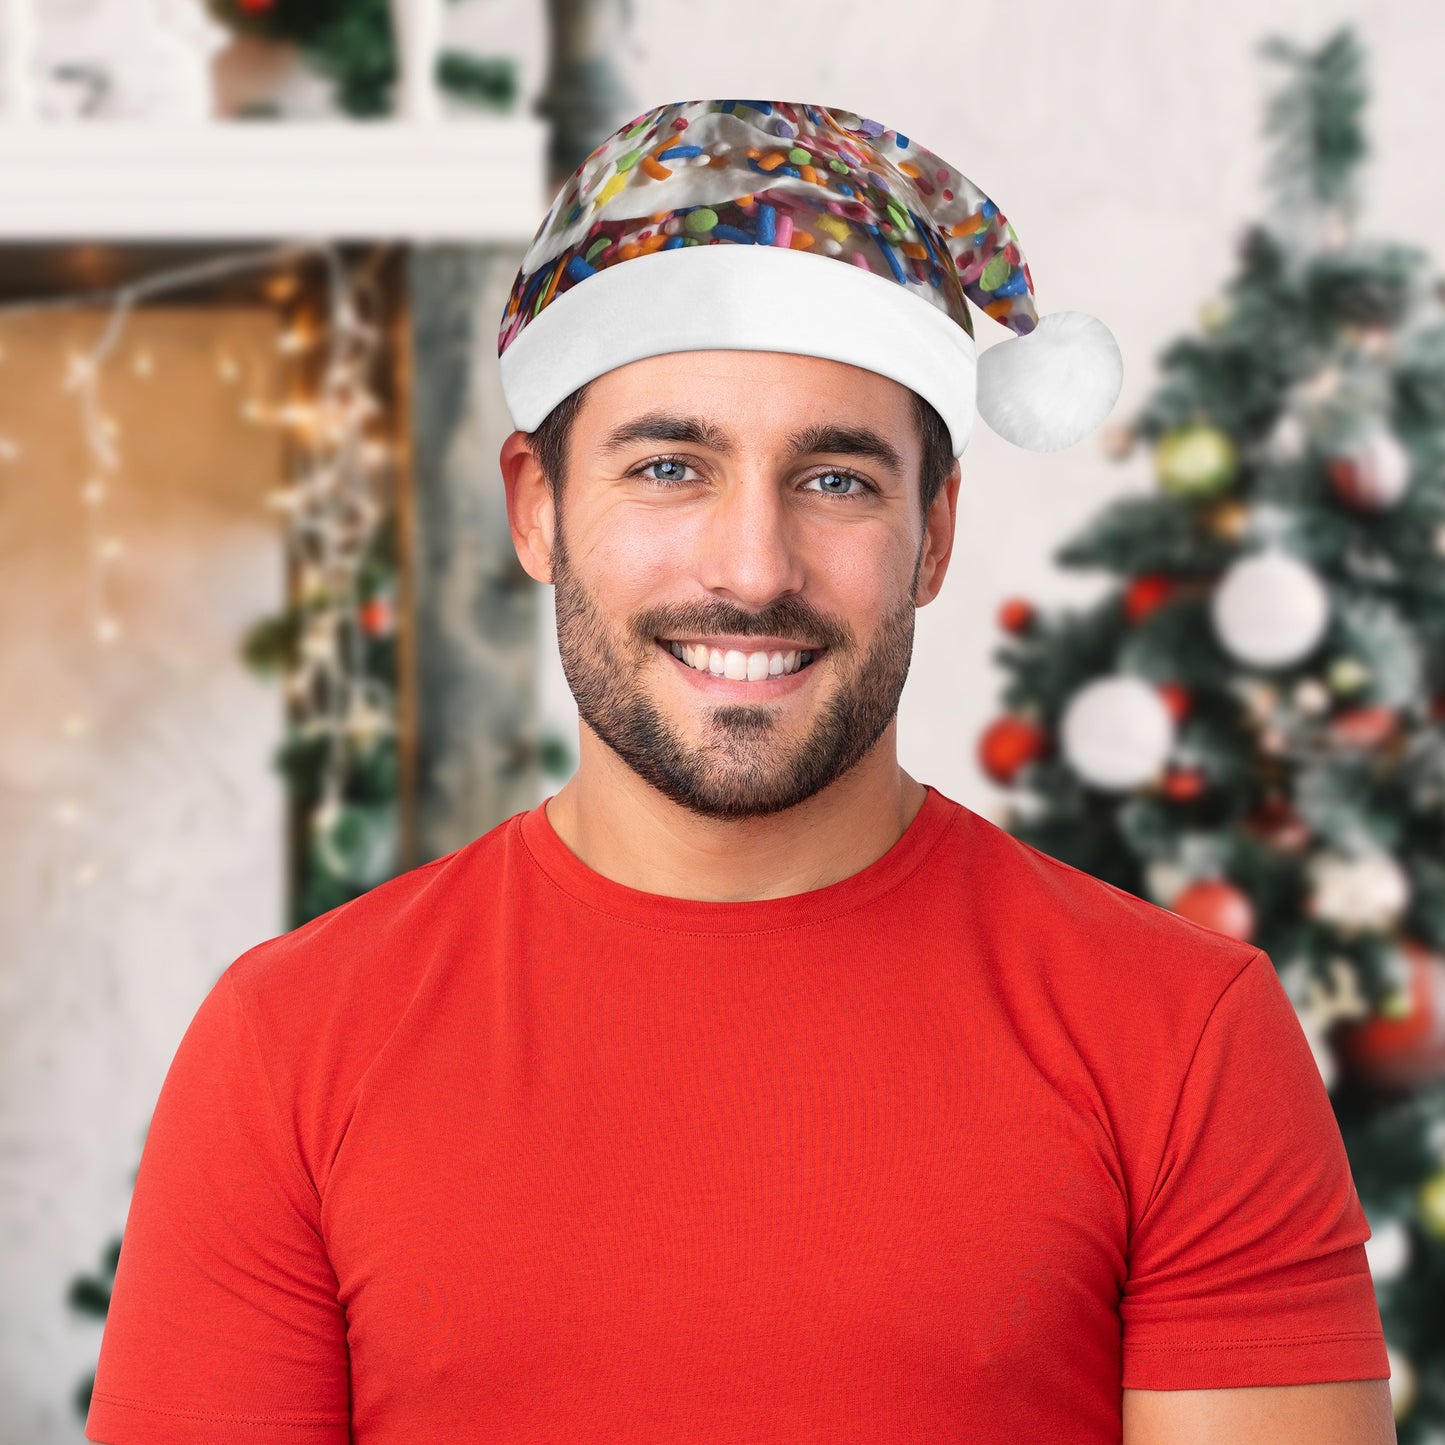 Rainbow Sprinkles and Whipped Cream Christmas Santa‘s Hats